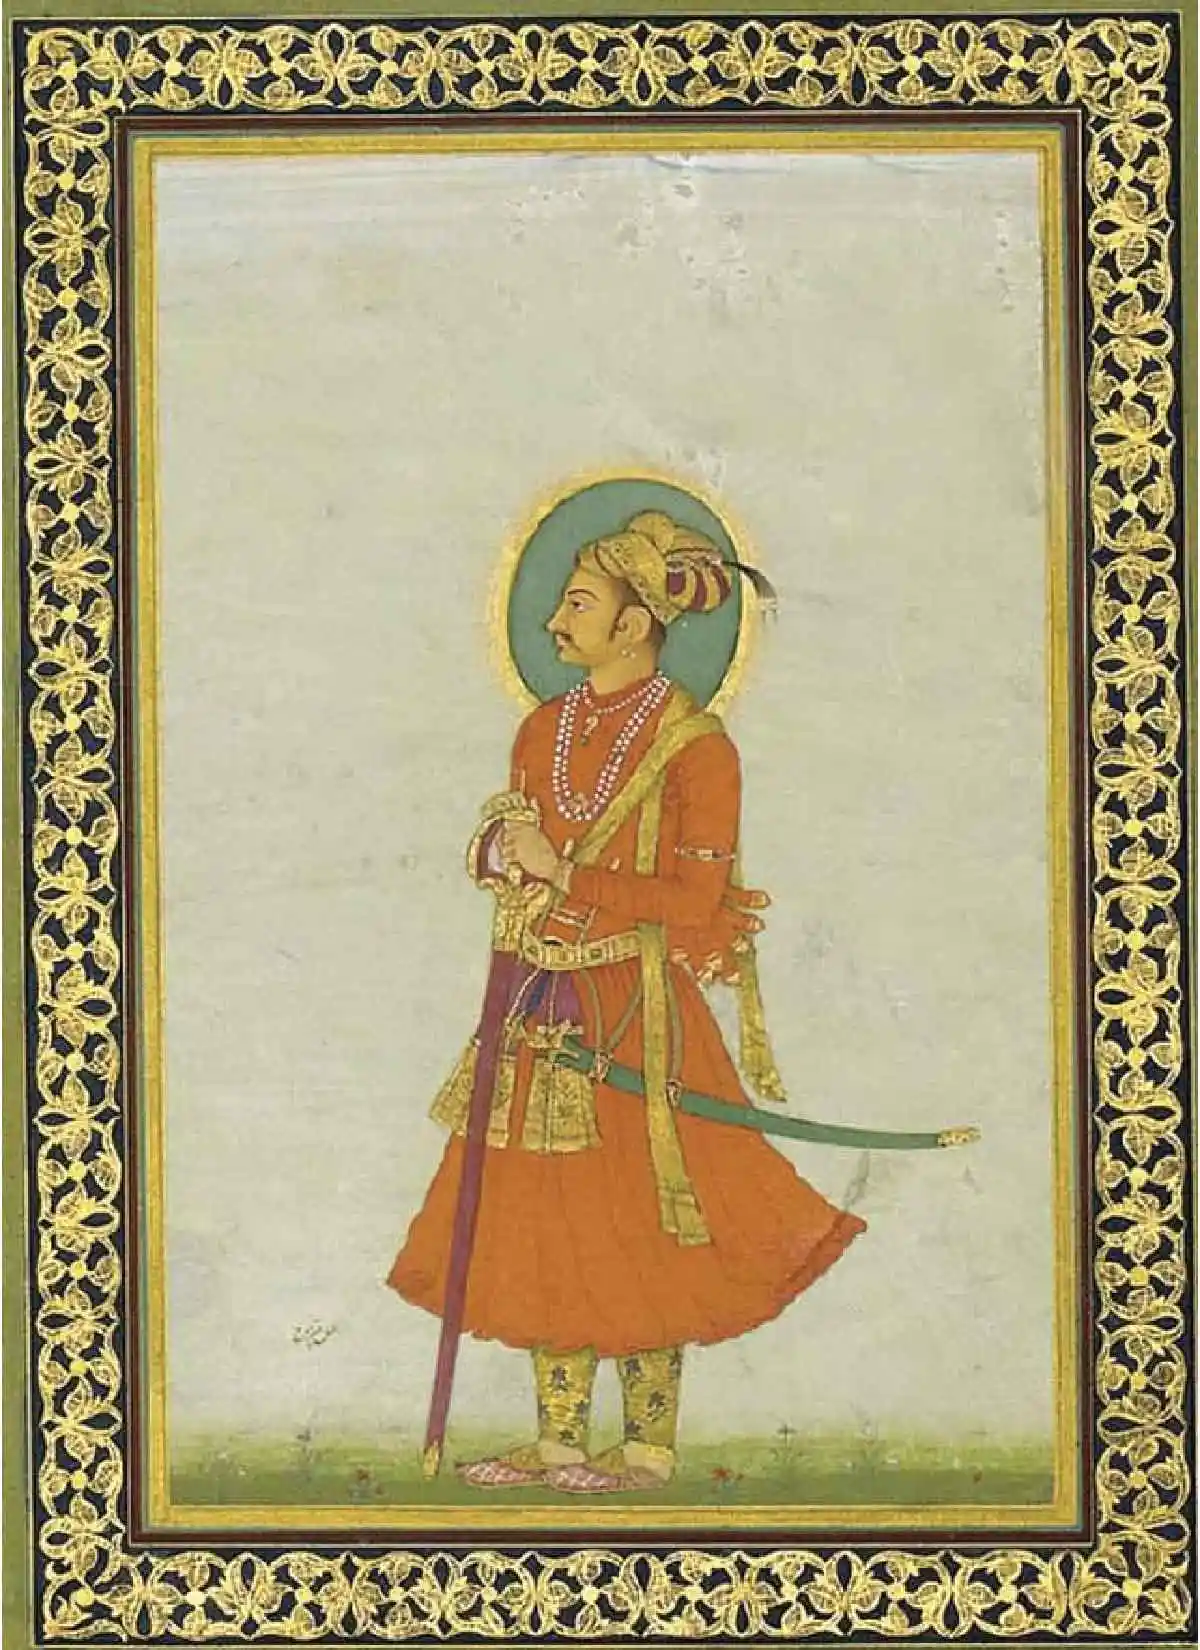 Raja Karan Singh Miniature (Father of Anup SIngh), Source: Wikimedia Commons